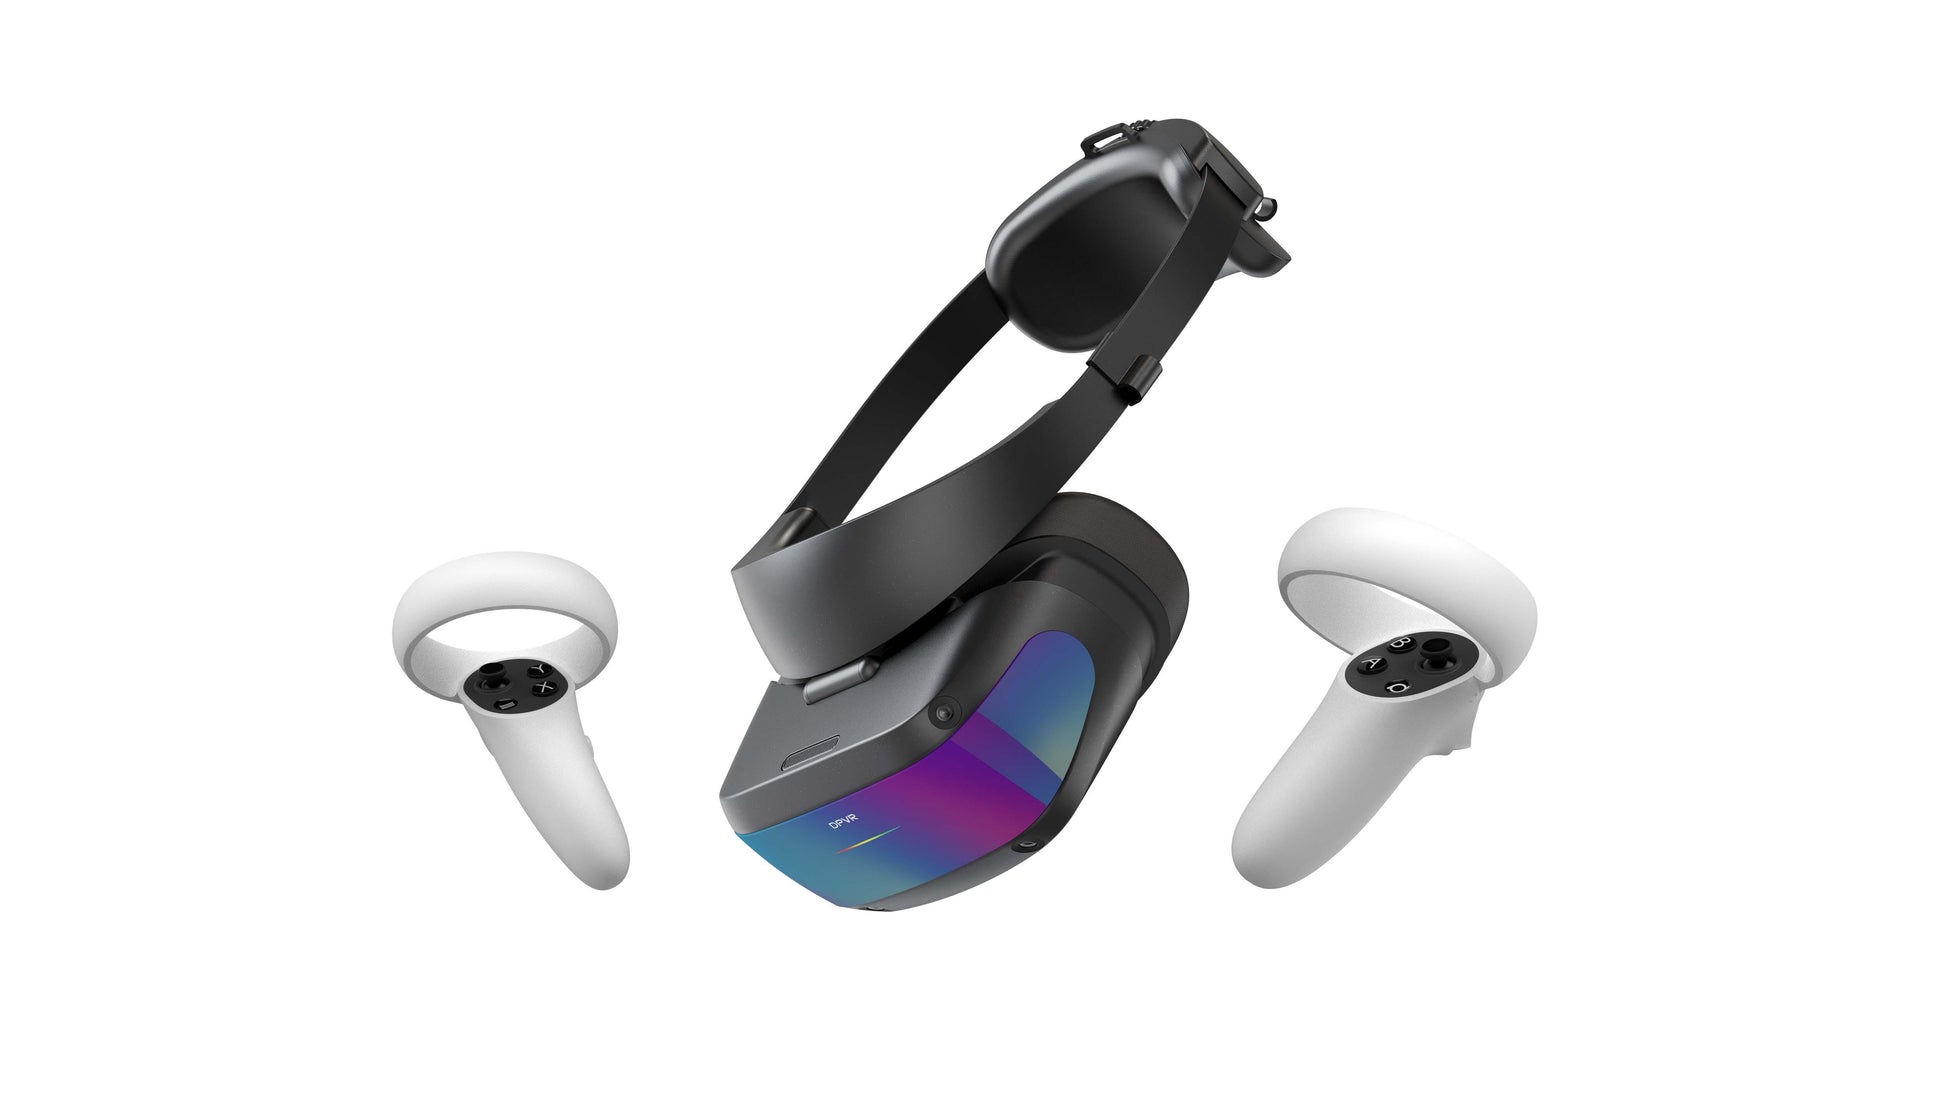 DPVR E4 - Gafas de Realidad Virtual - XRShop